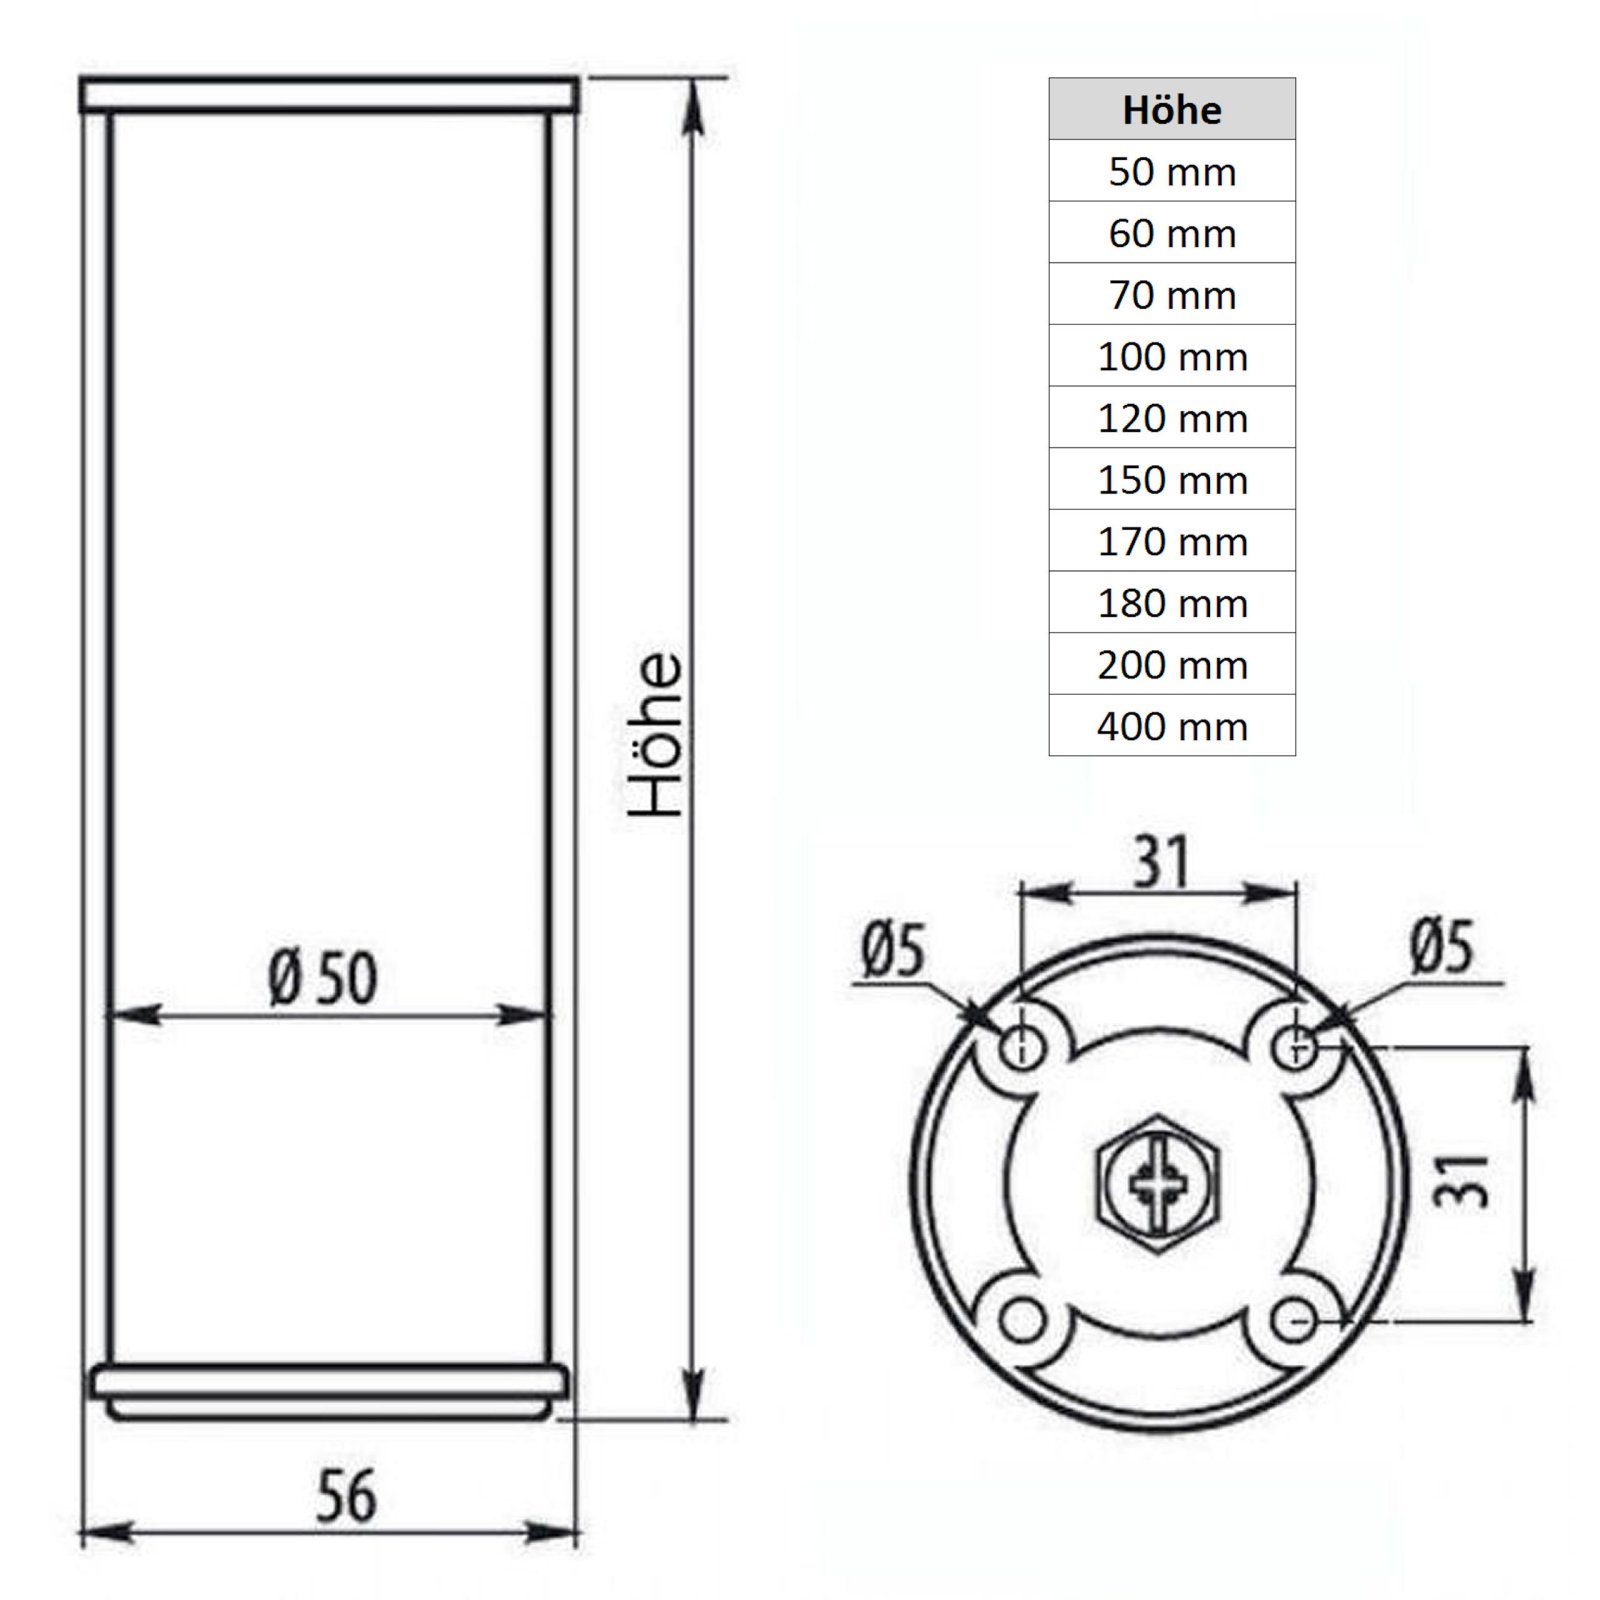 SO-TECH® Möbelfuß 4er Set Schrankfuß Höhe: mm mm 50 150 höhenverstellbar Ø